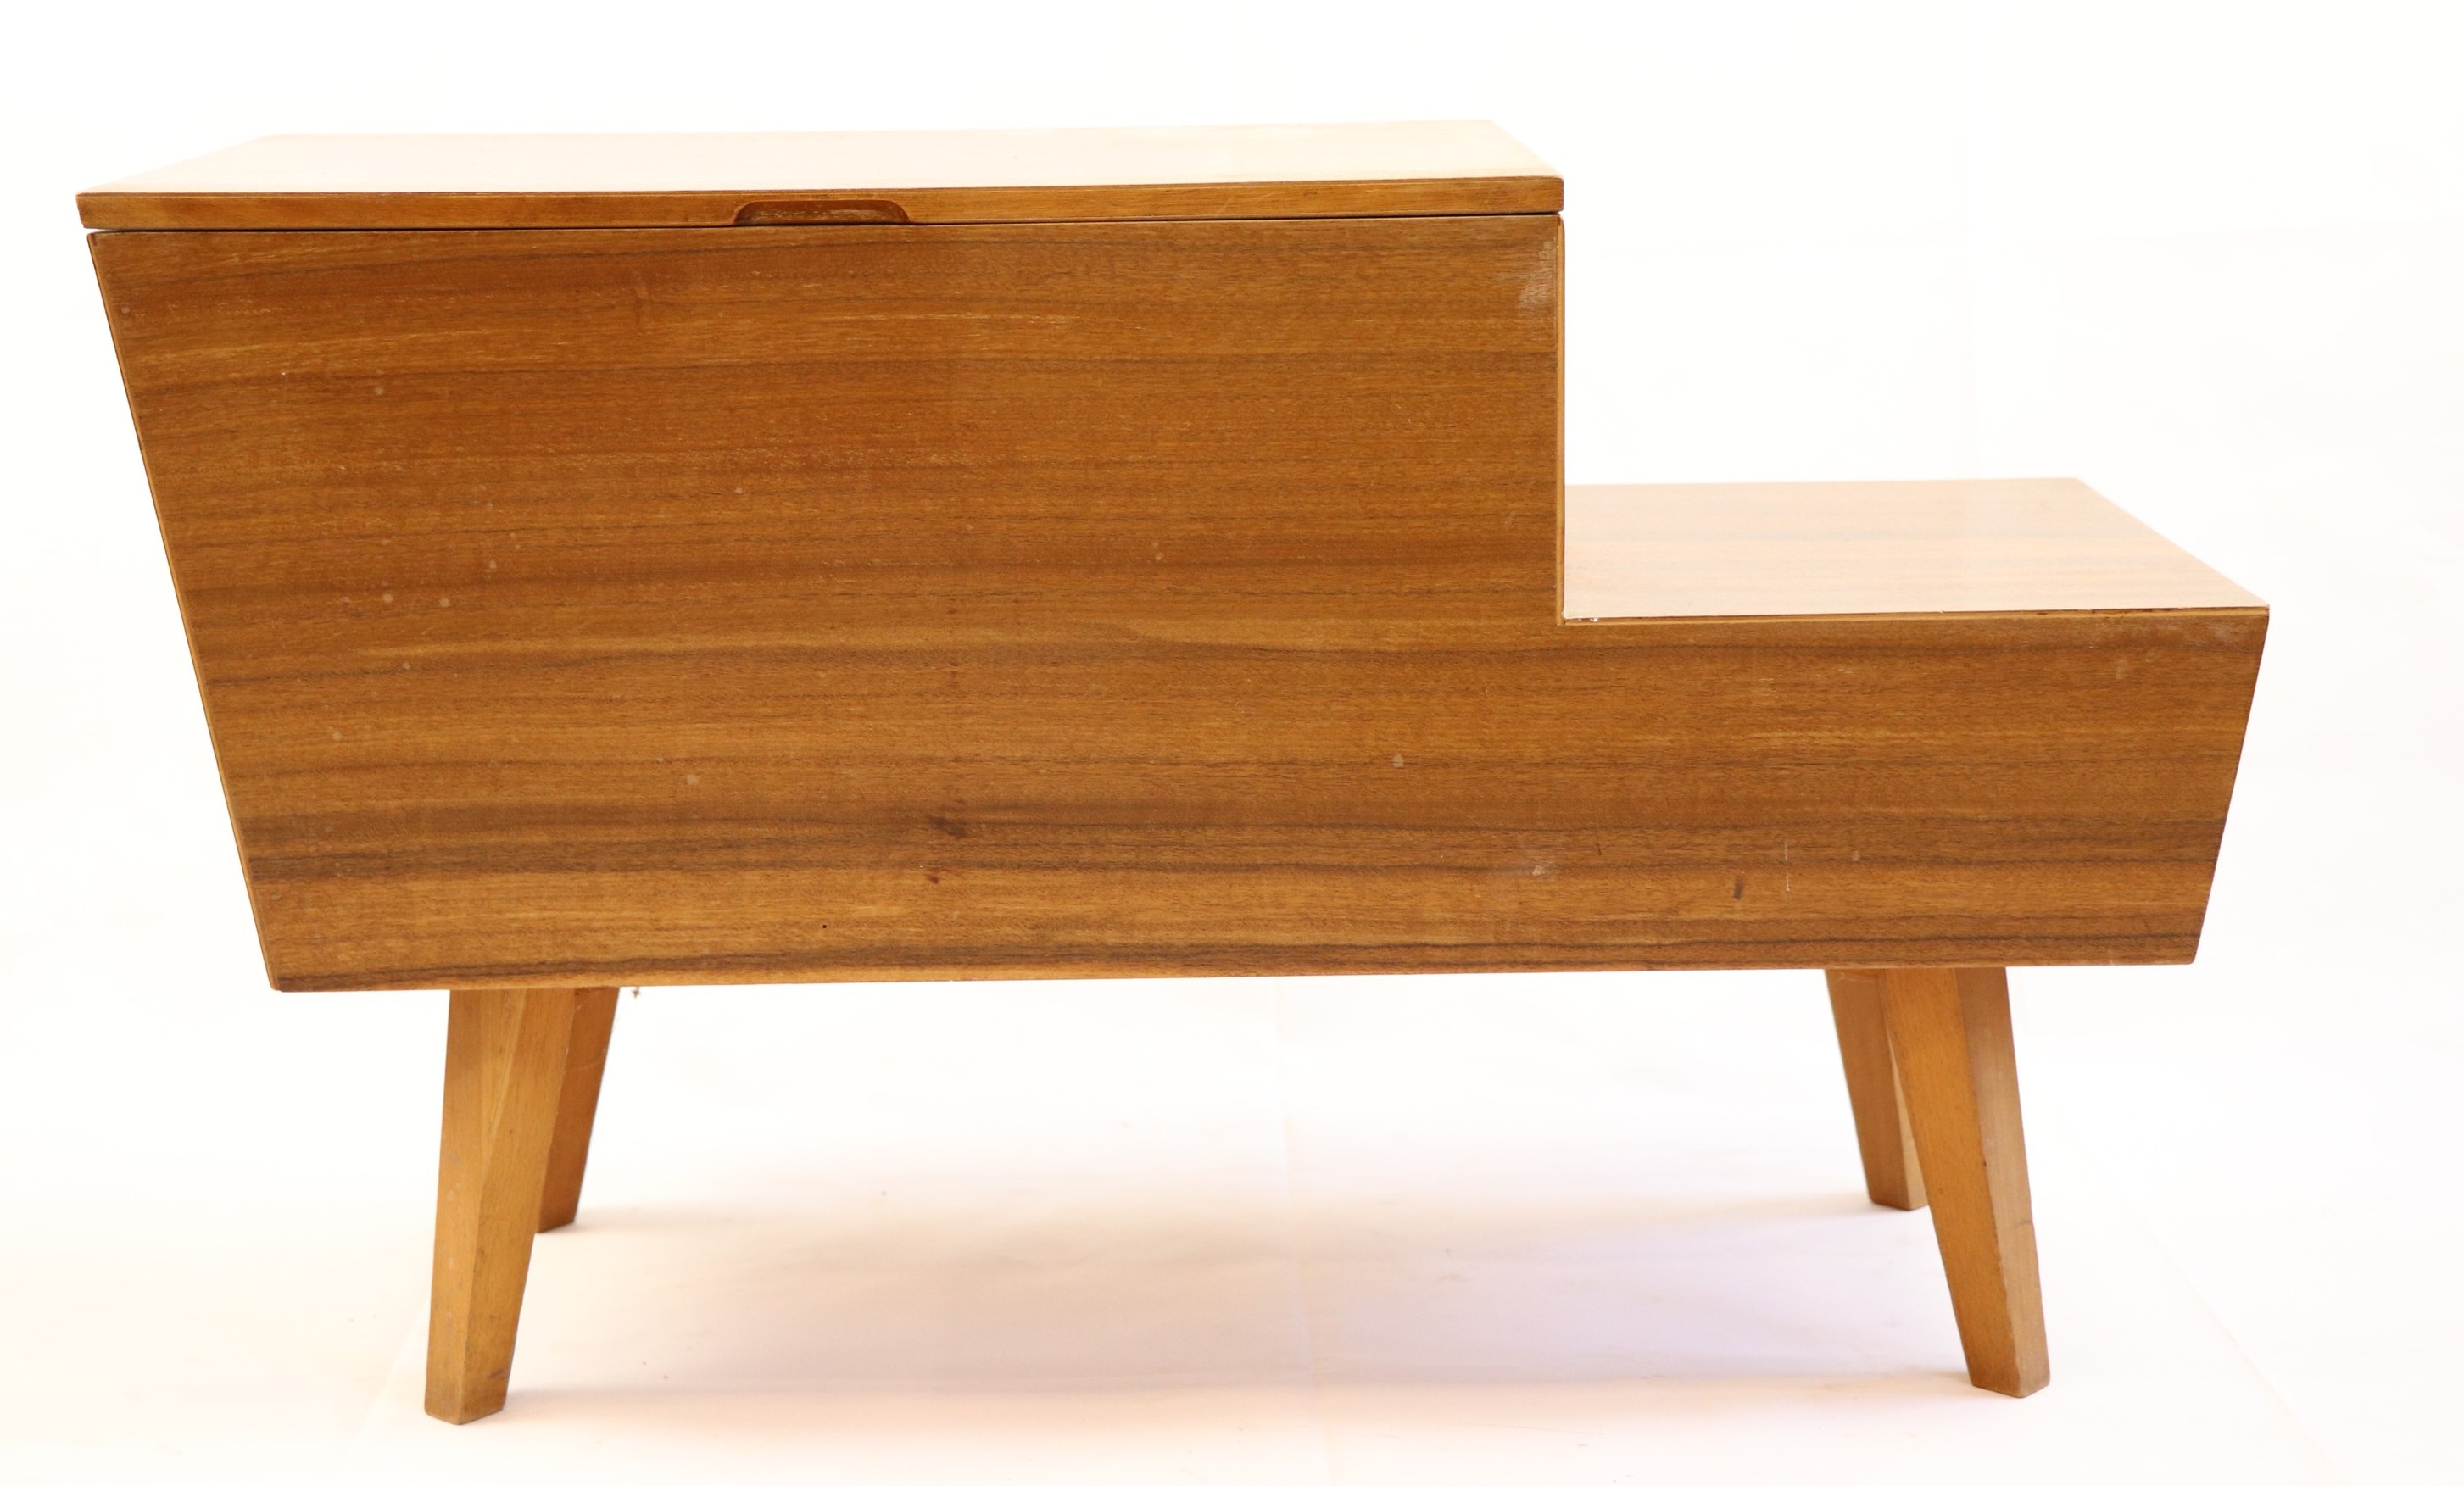 A mid-20th Century teak sewing box / table, 75 cm x 33 cm x 46 cm - Image 2 of 6